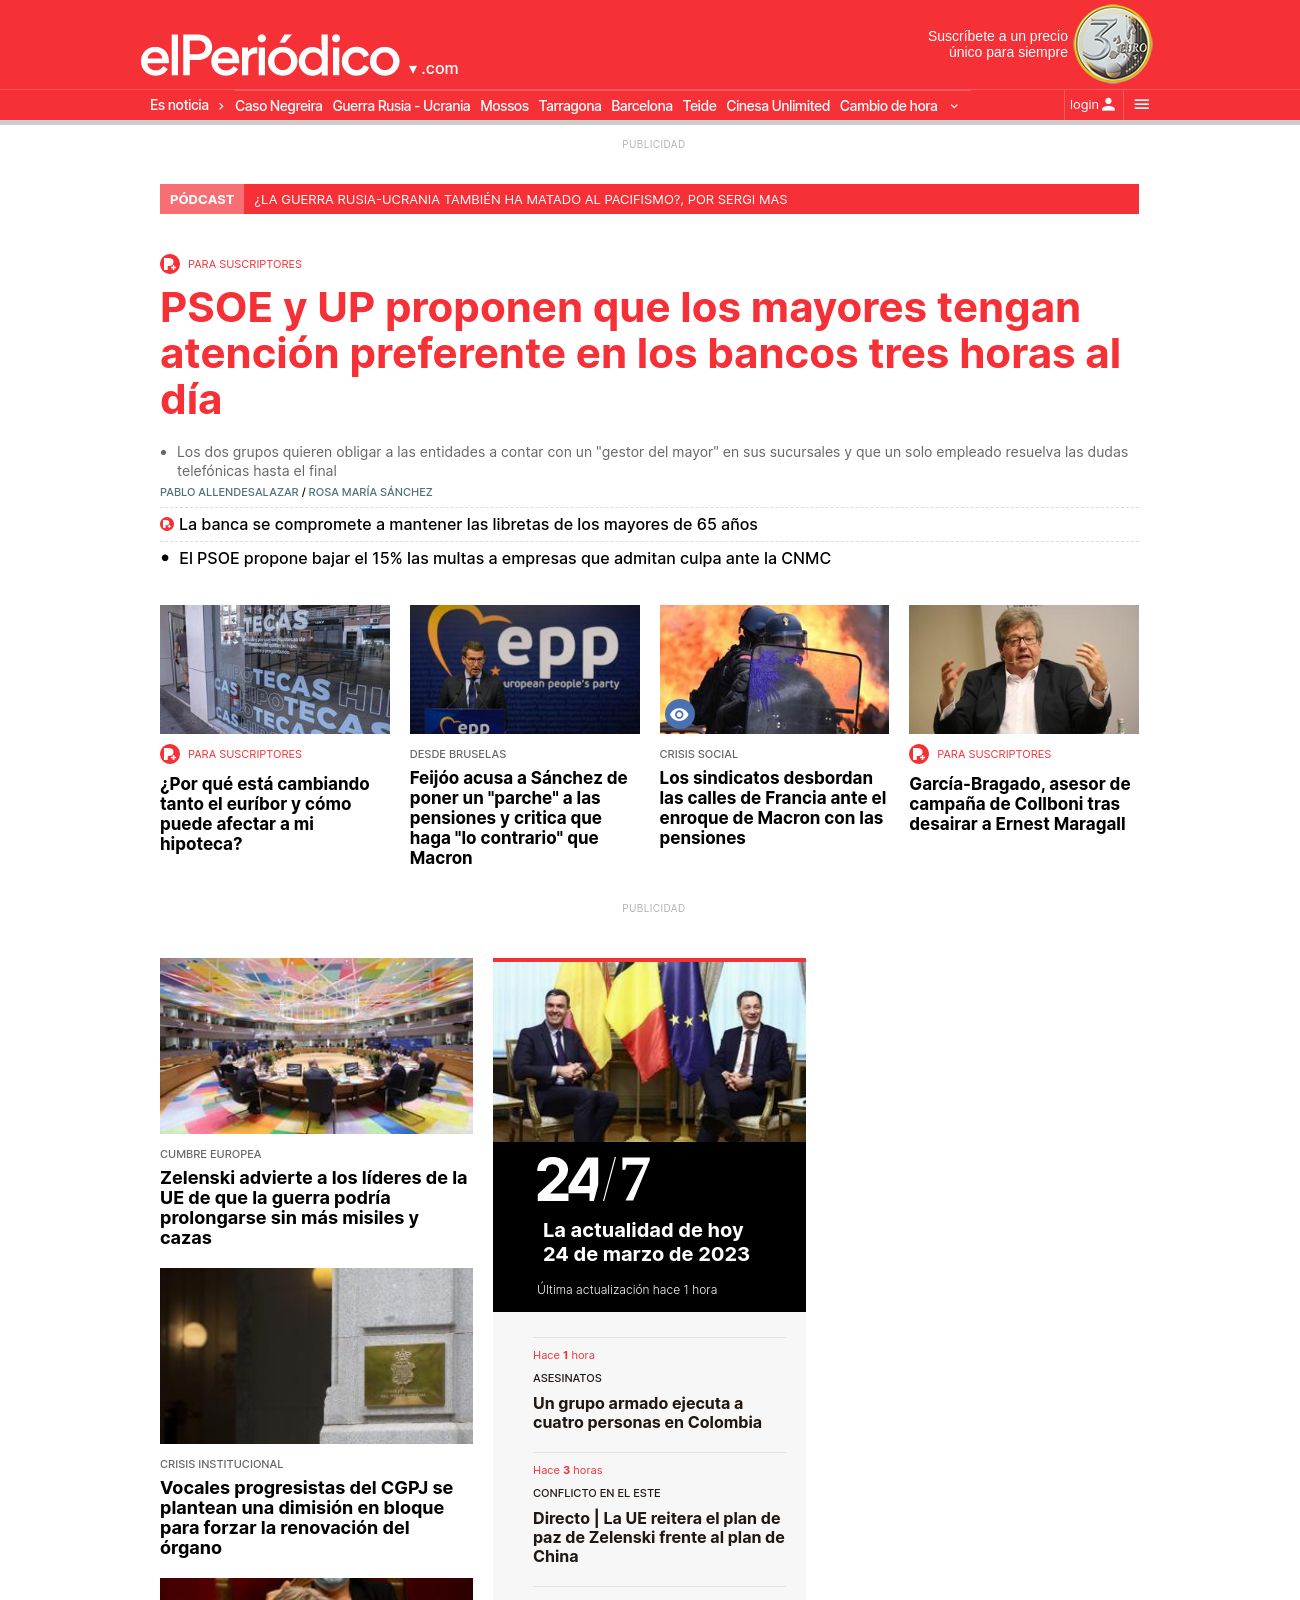 El Periodico at 2023-03-24 02:51:12+01:00 local time